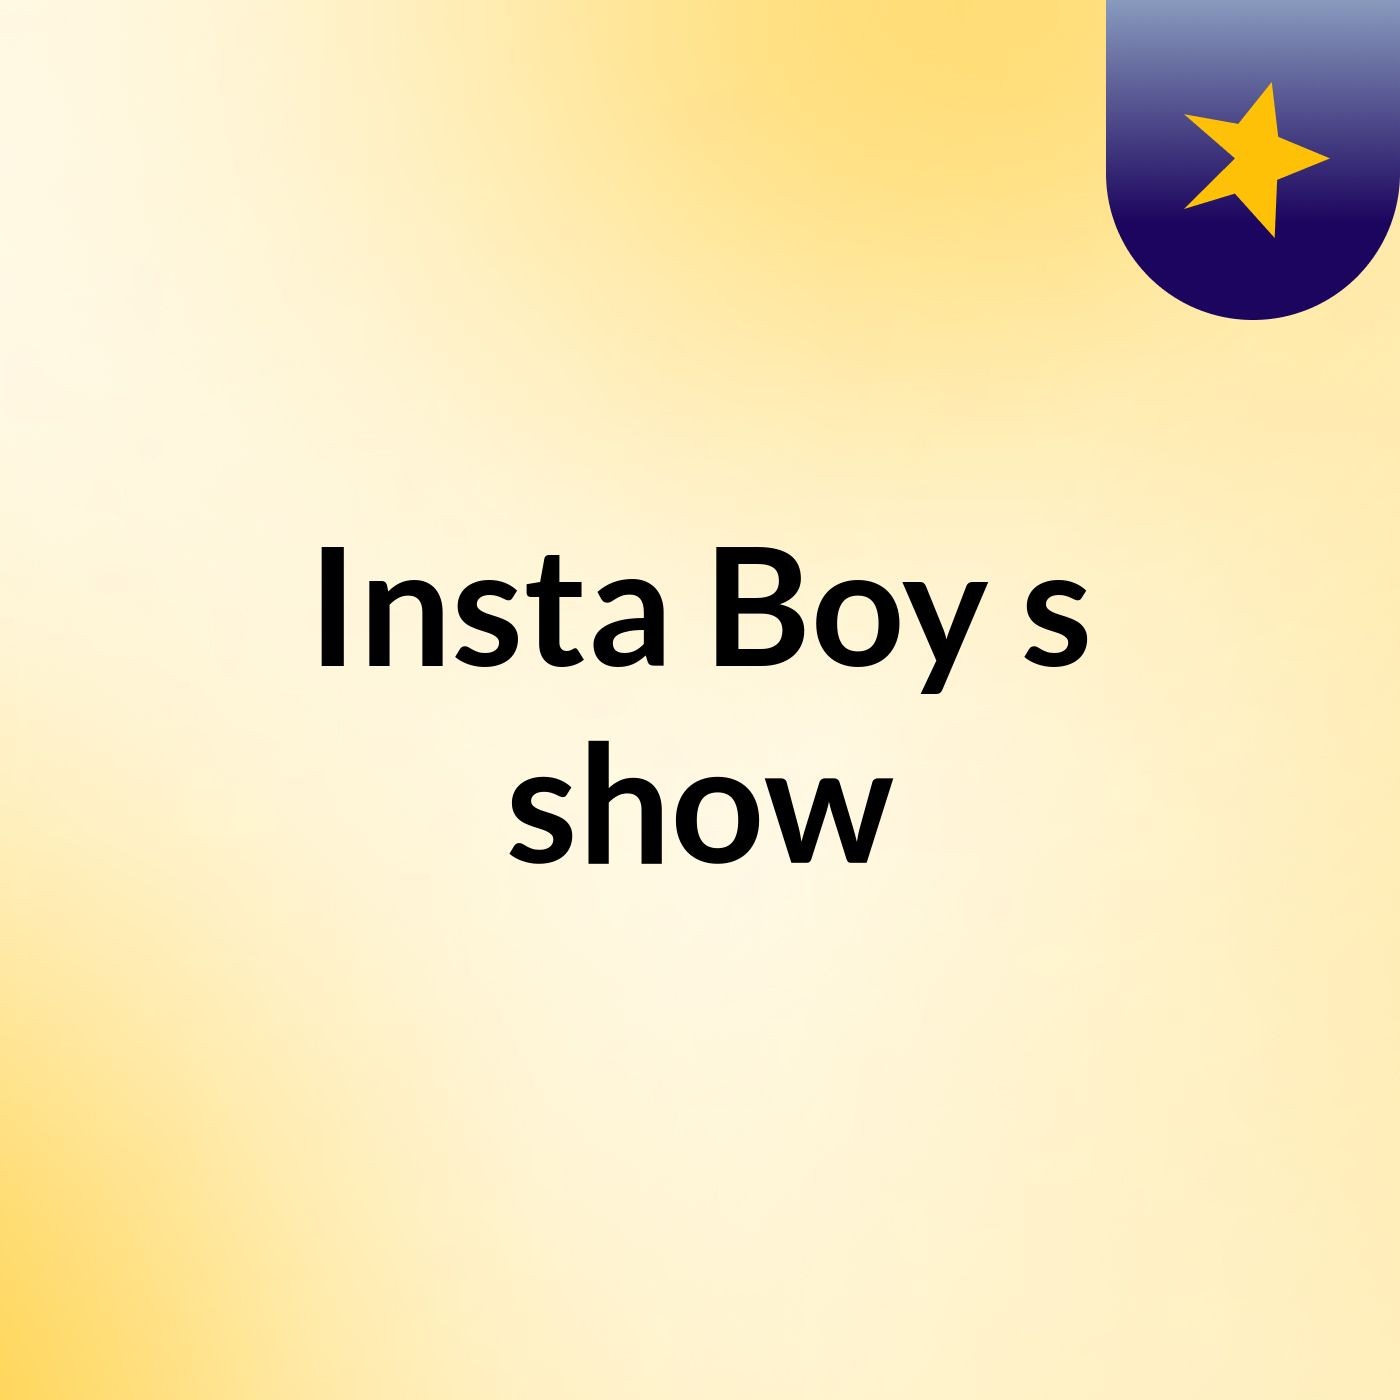 Insta Boy's show